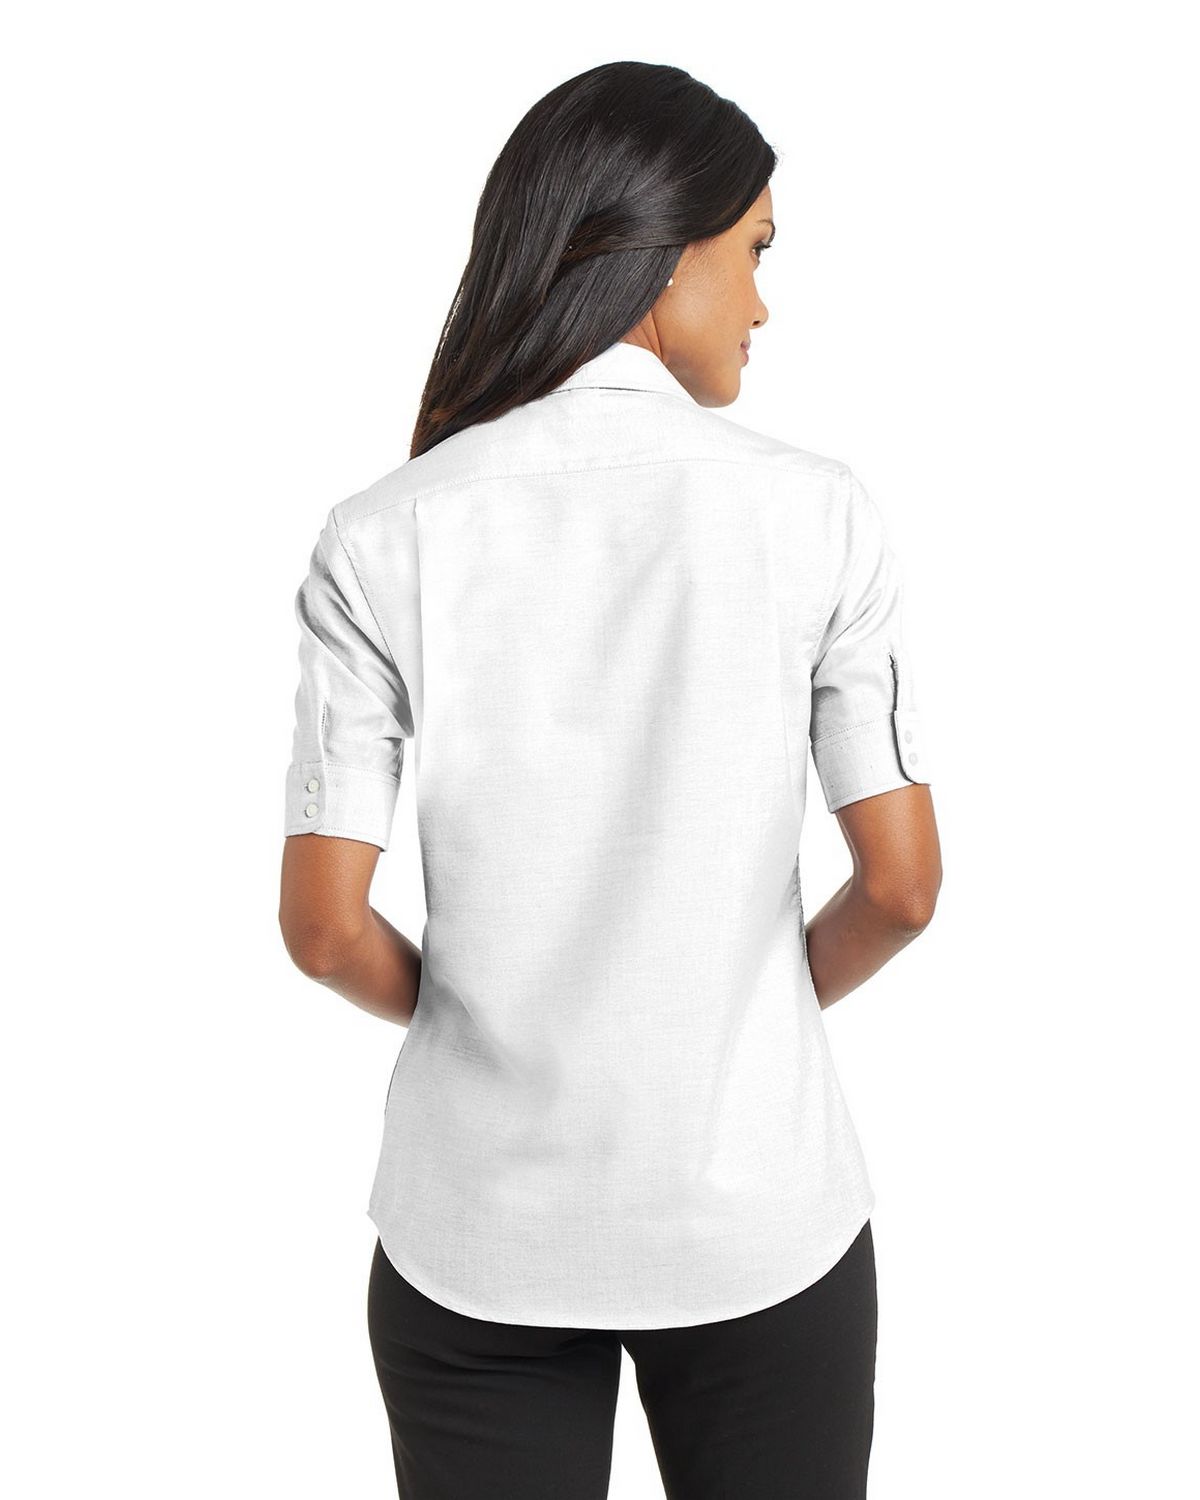 Logo Embroidered Short Sleeve Oxford Dress Shirt - For Women